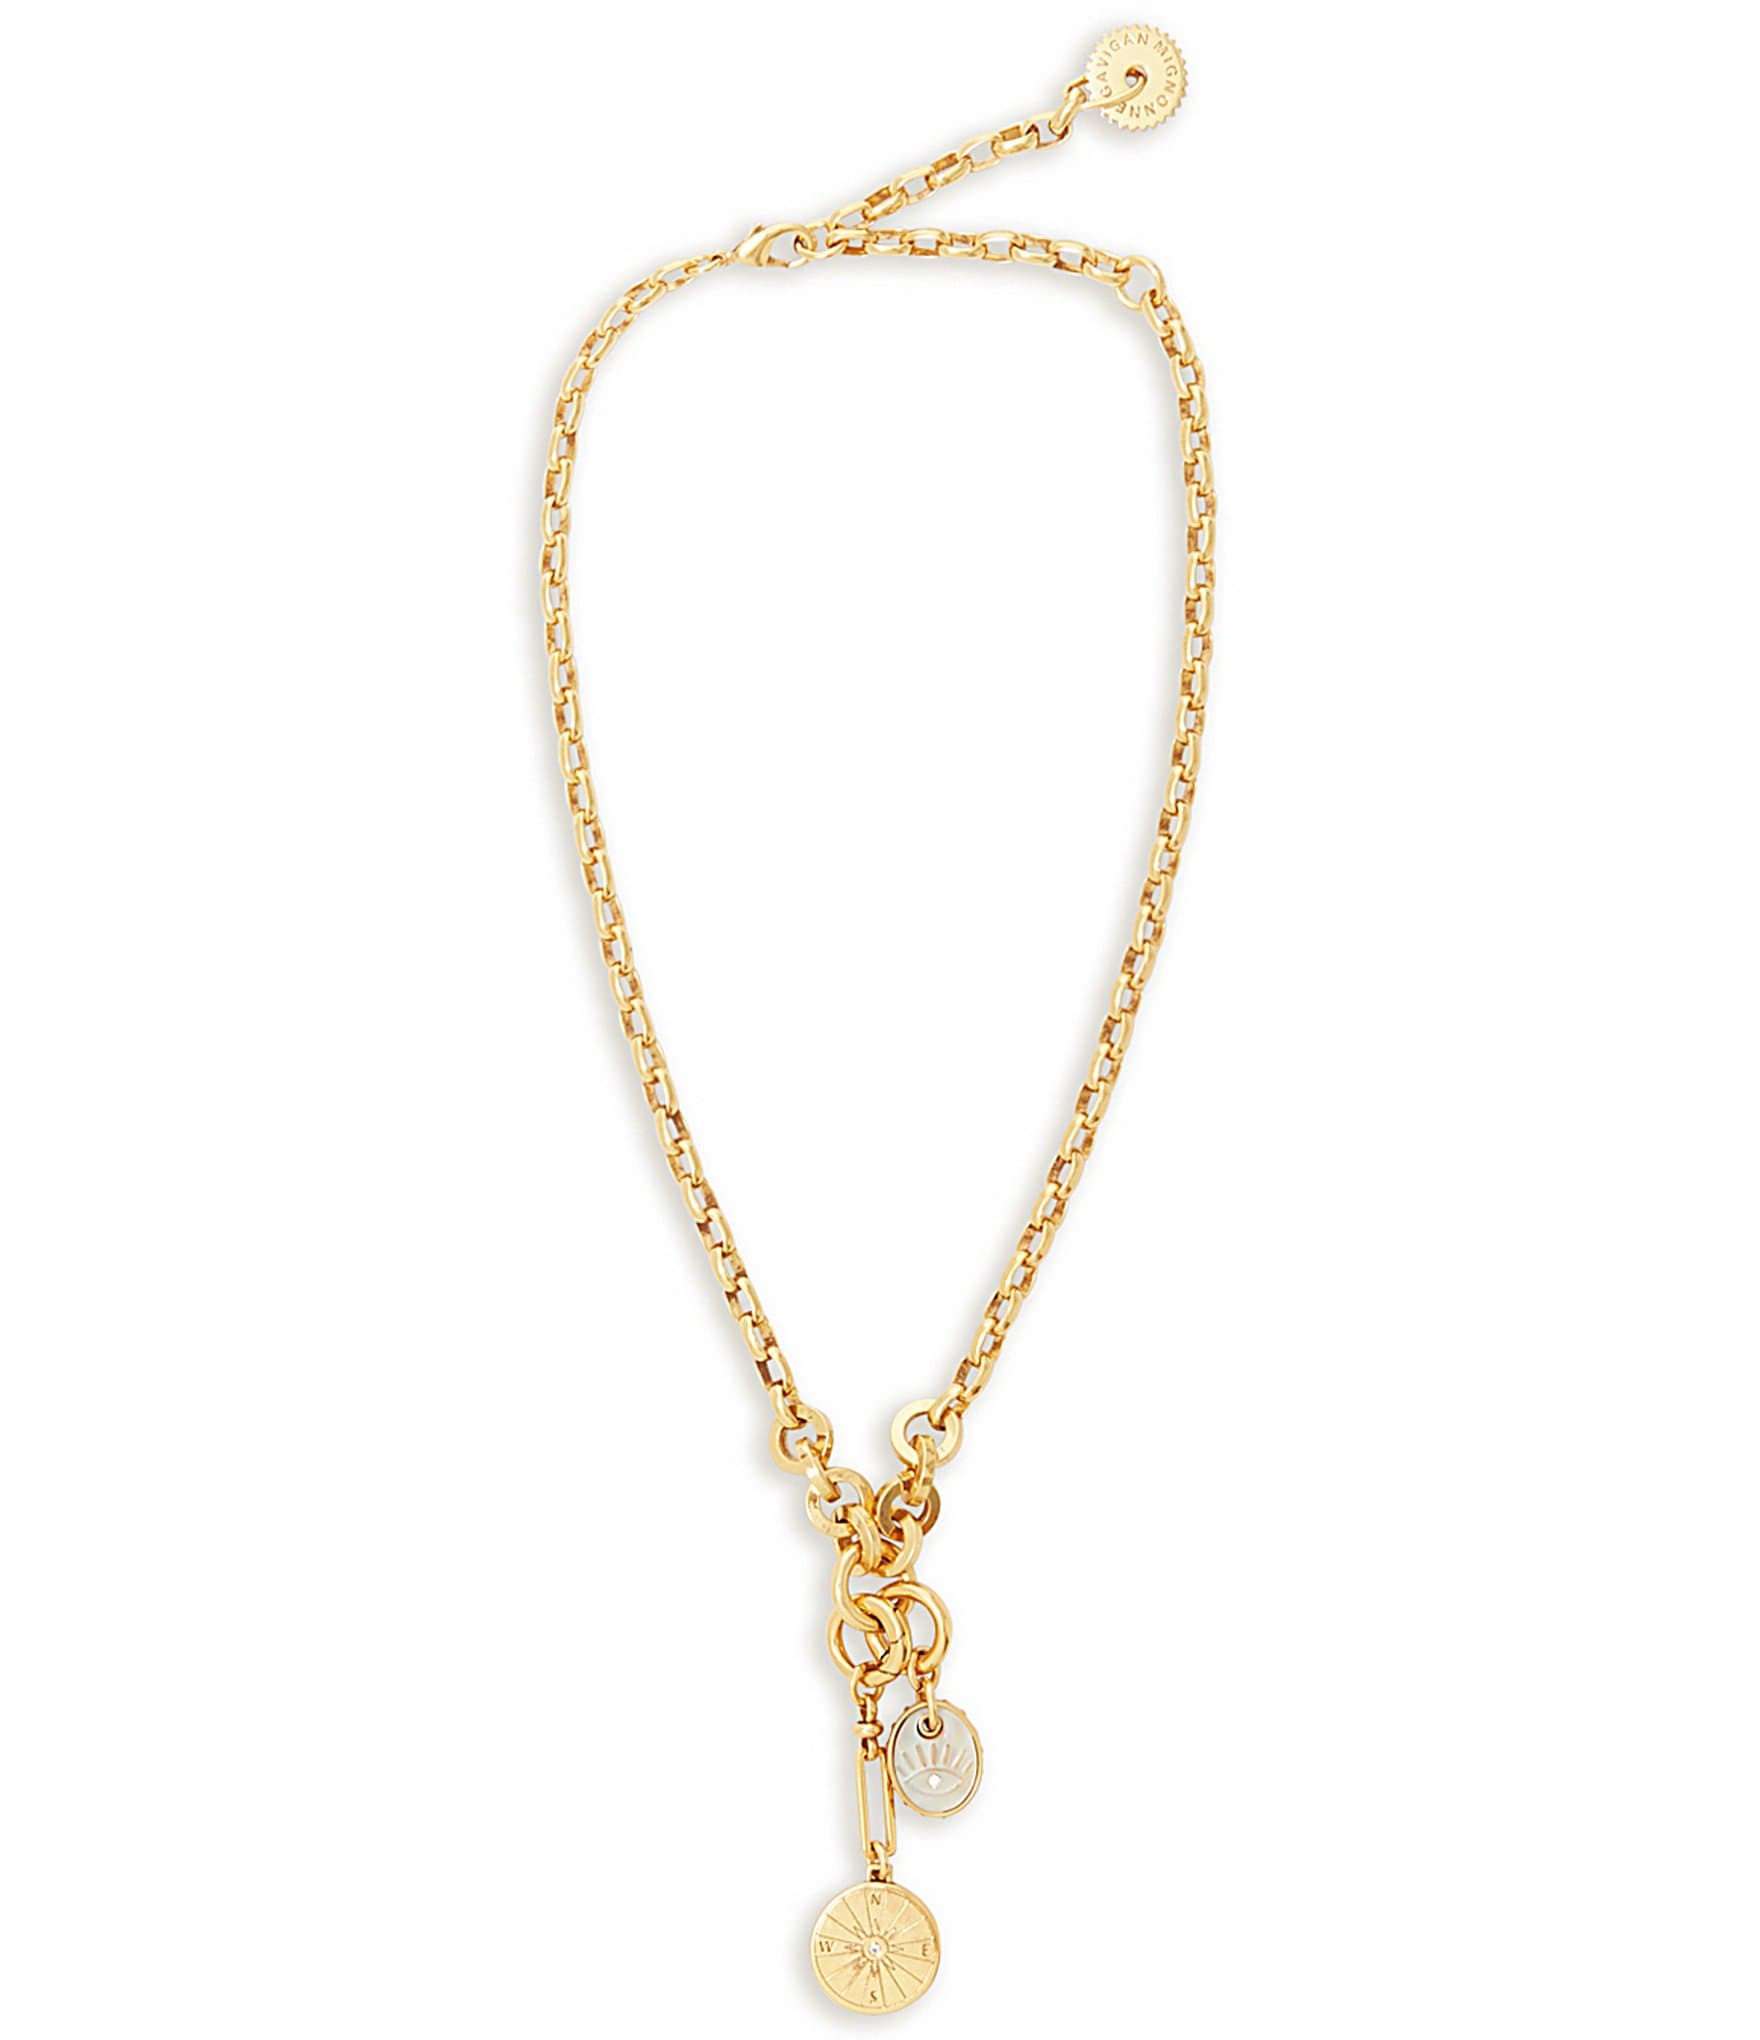 Odyssey Necklace Black Gold by Mignonne Gavigan